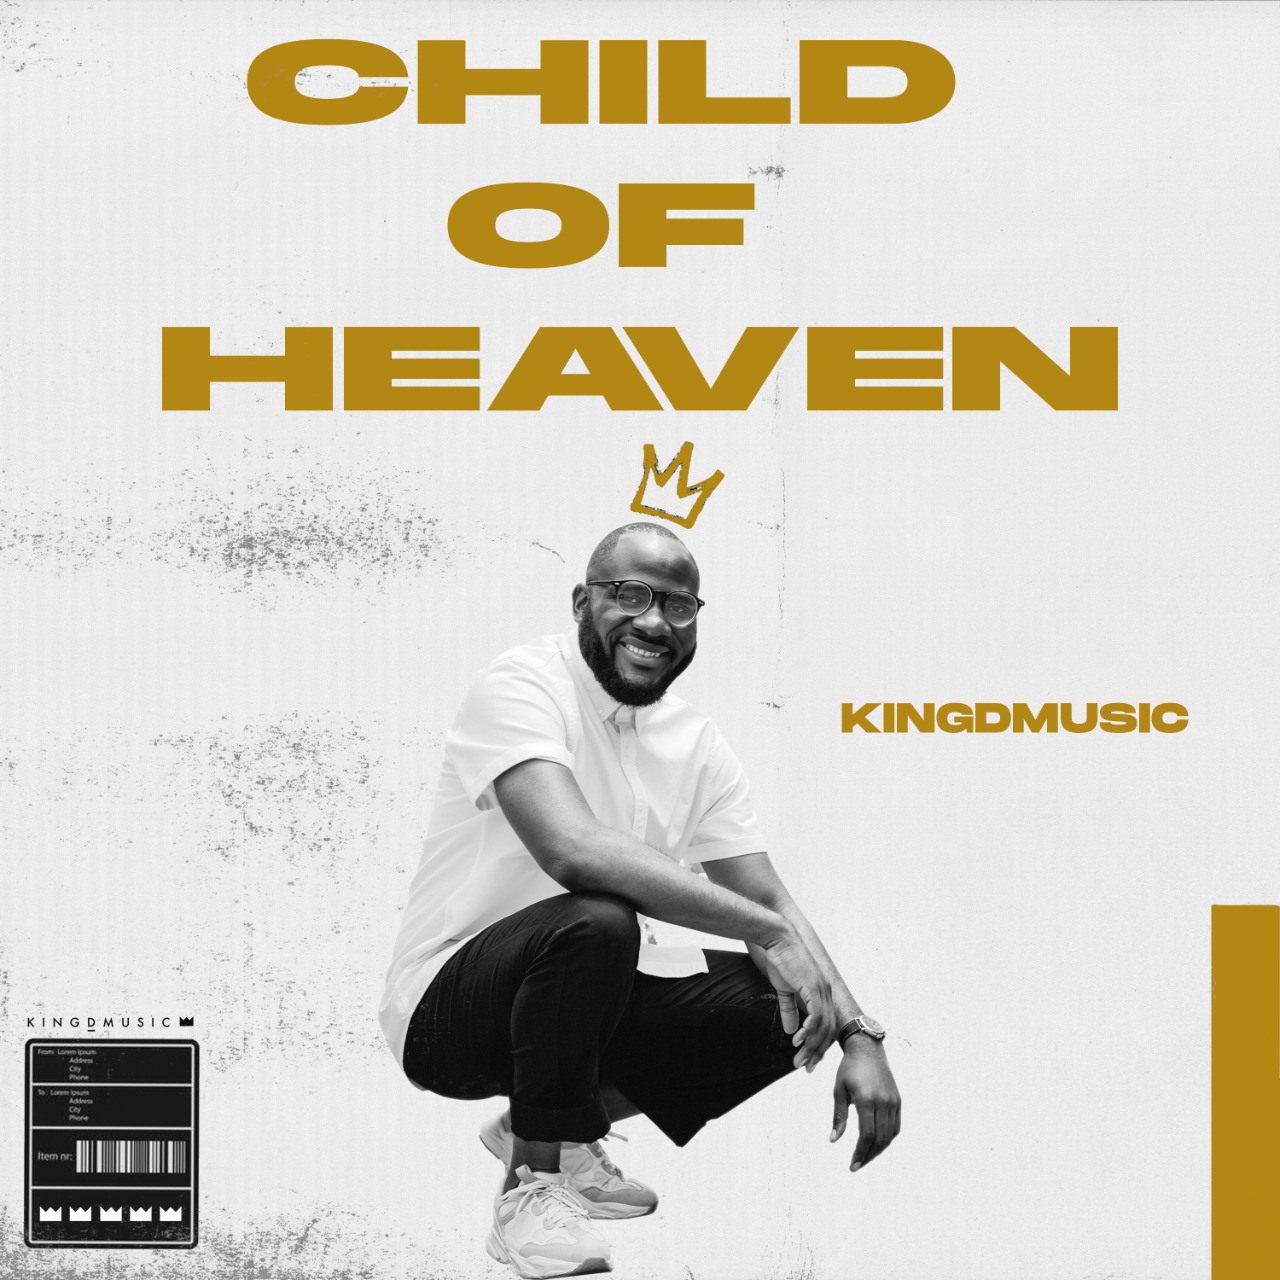 Kingdmusic - Child Of Heaven